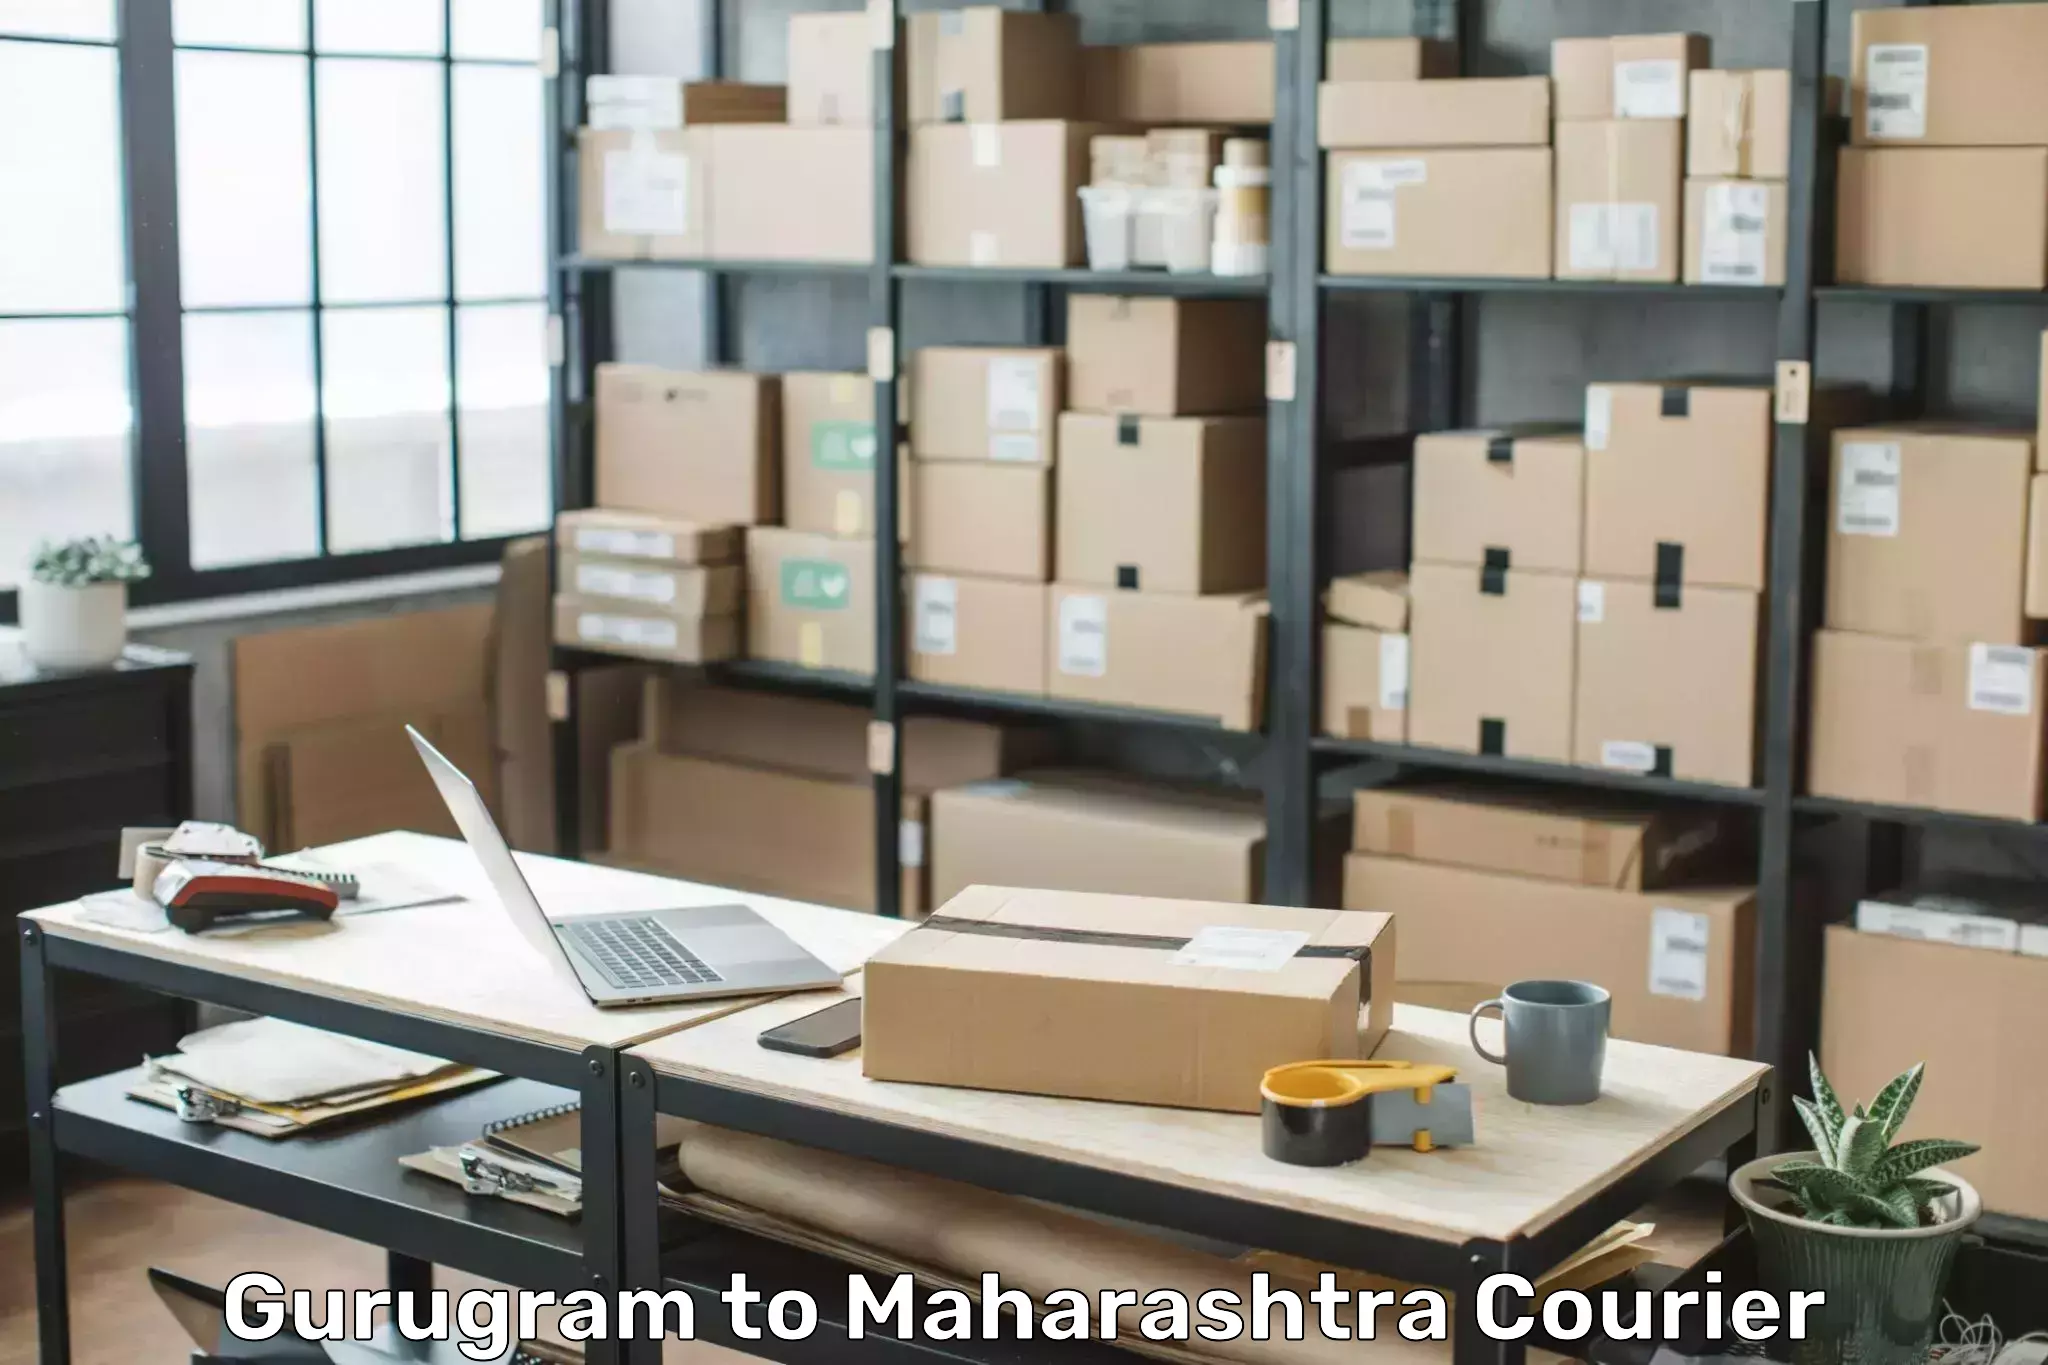 Online luggage shipping booking Gurugram to Nagpur